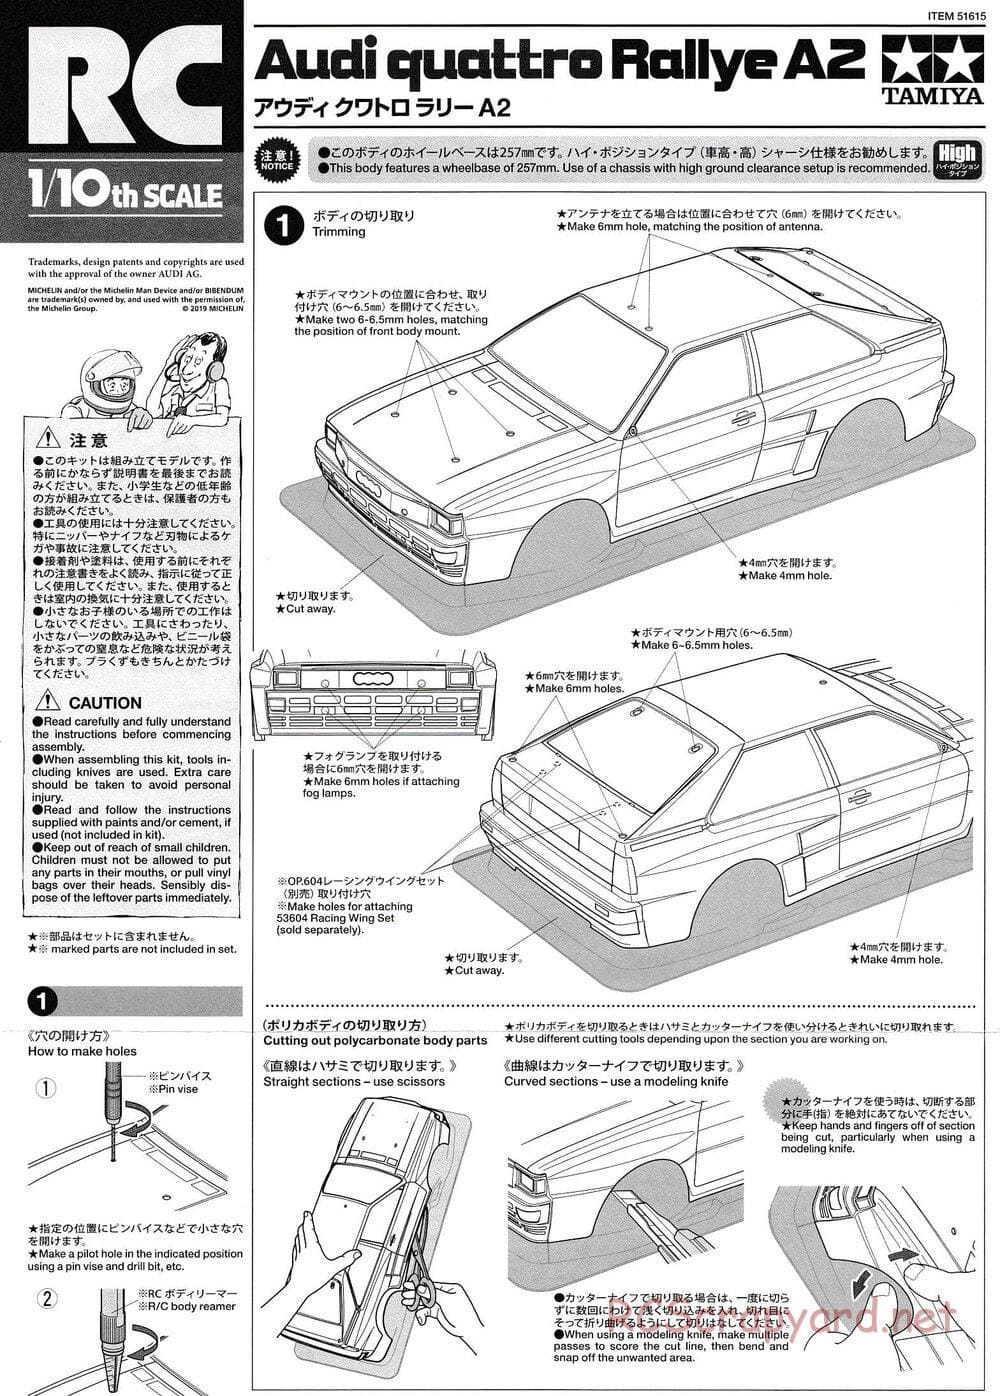 Tamiya - Audi Quattro Rallye A2 - TT-02 Chassis - Body Manual - Page 1